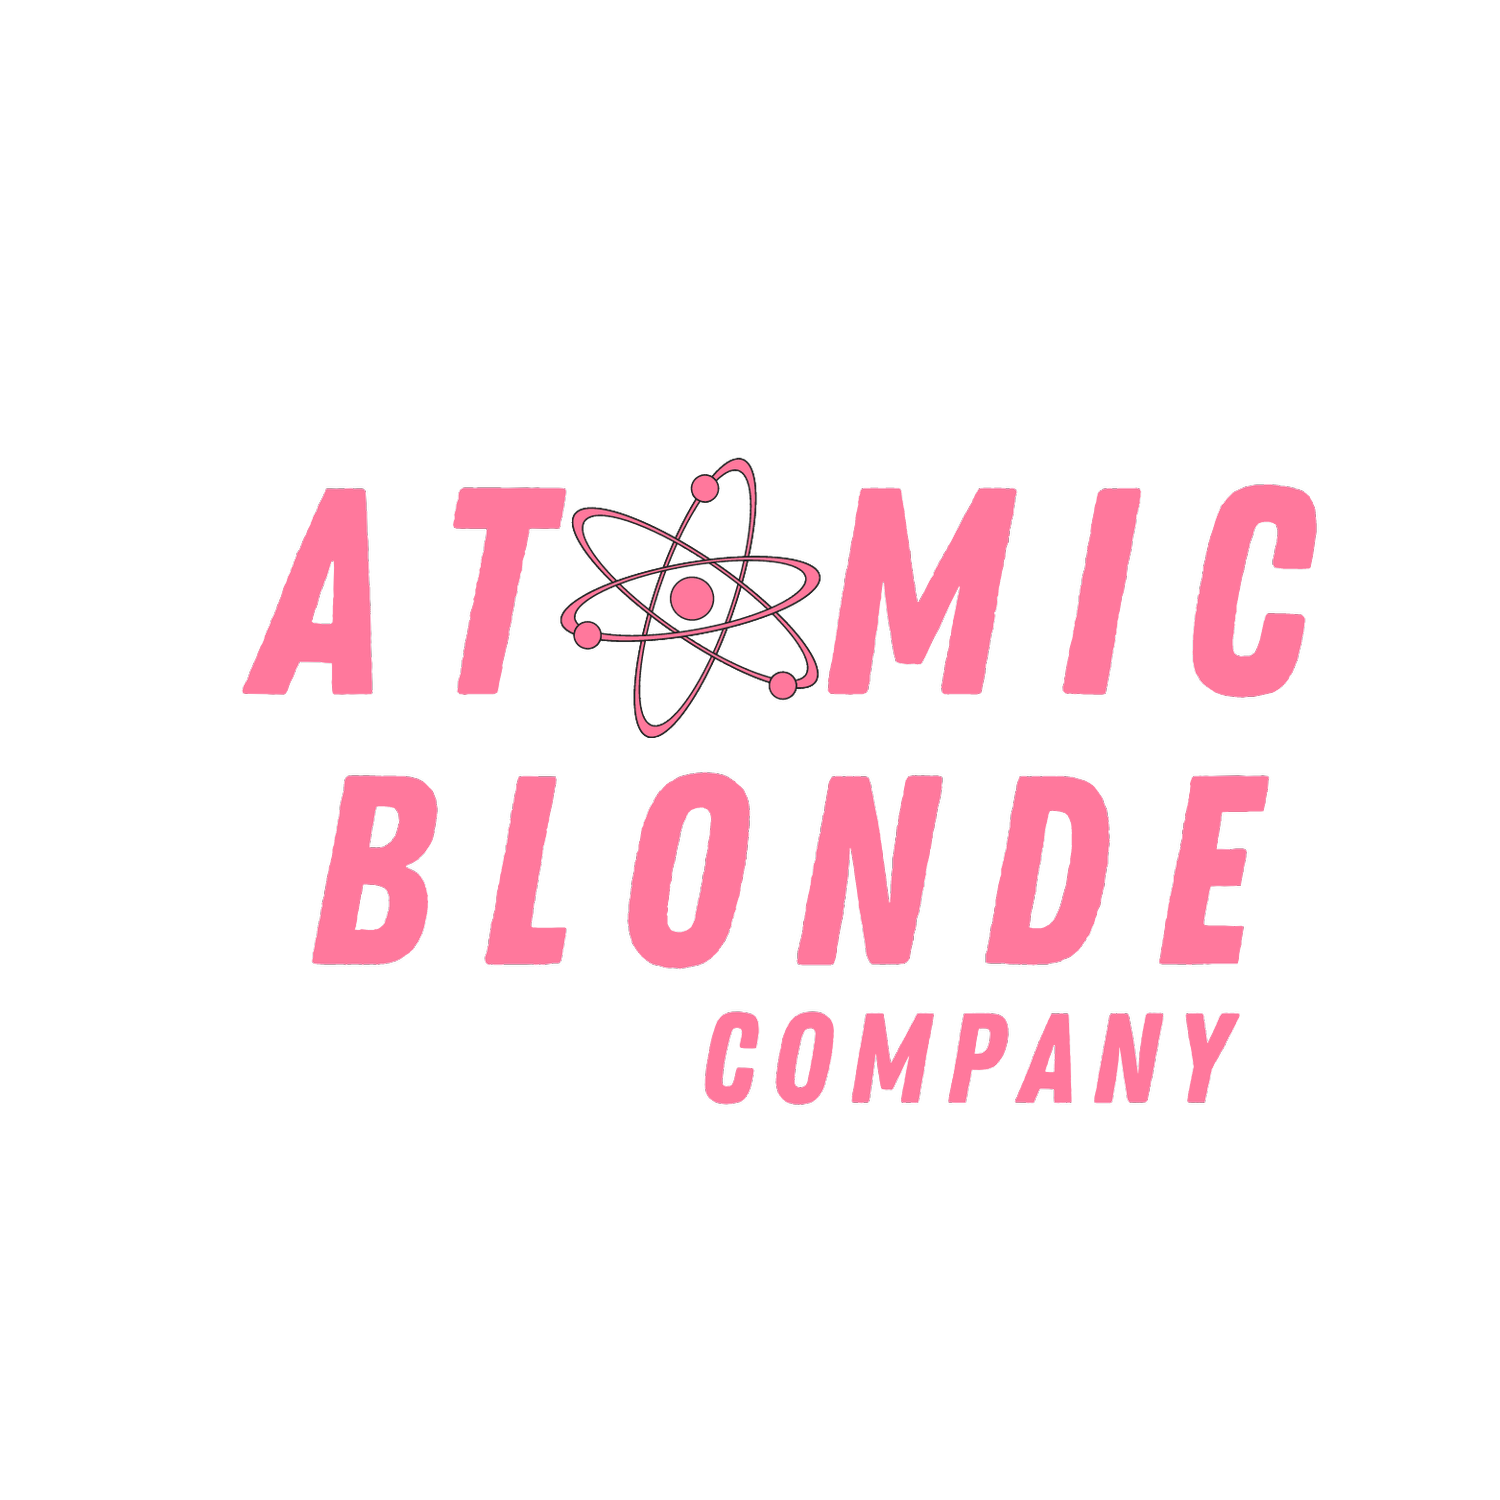 Atomic Blonde Company